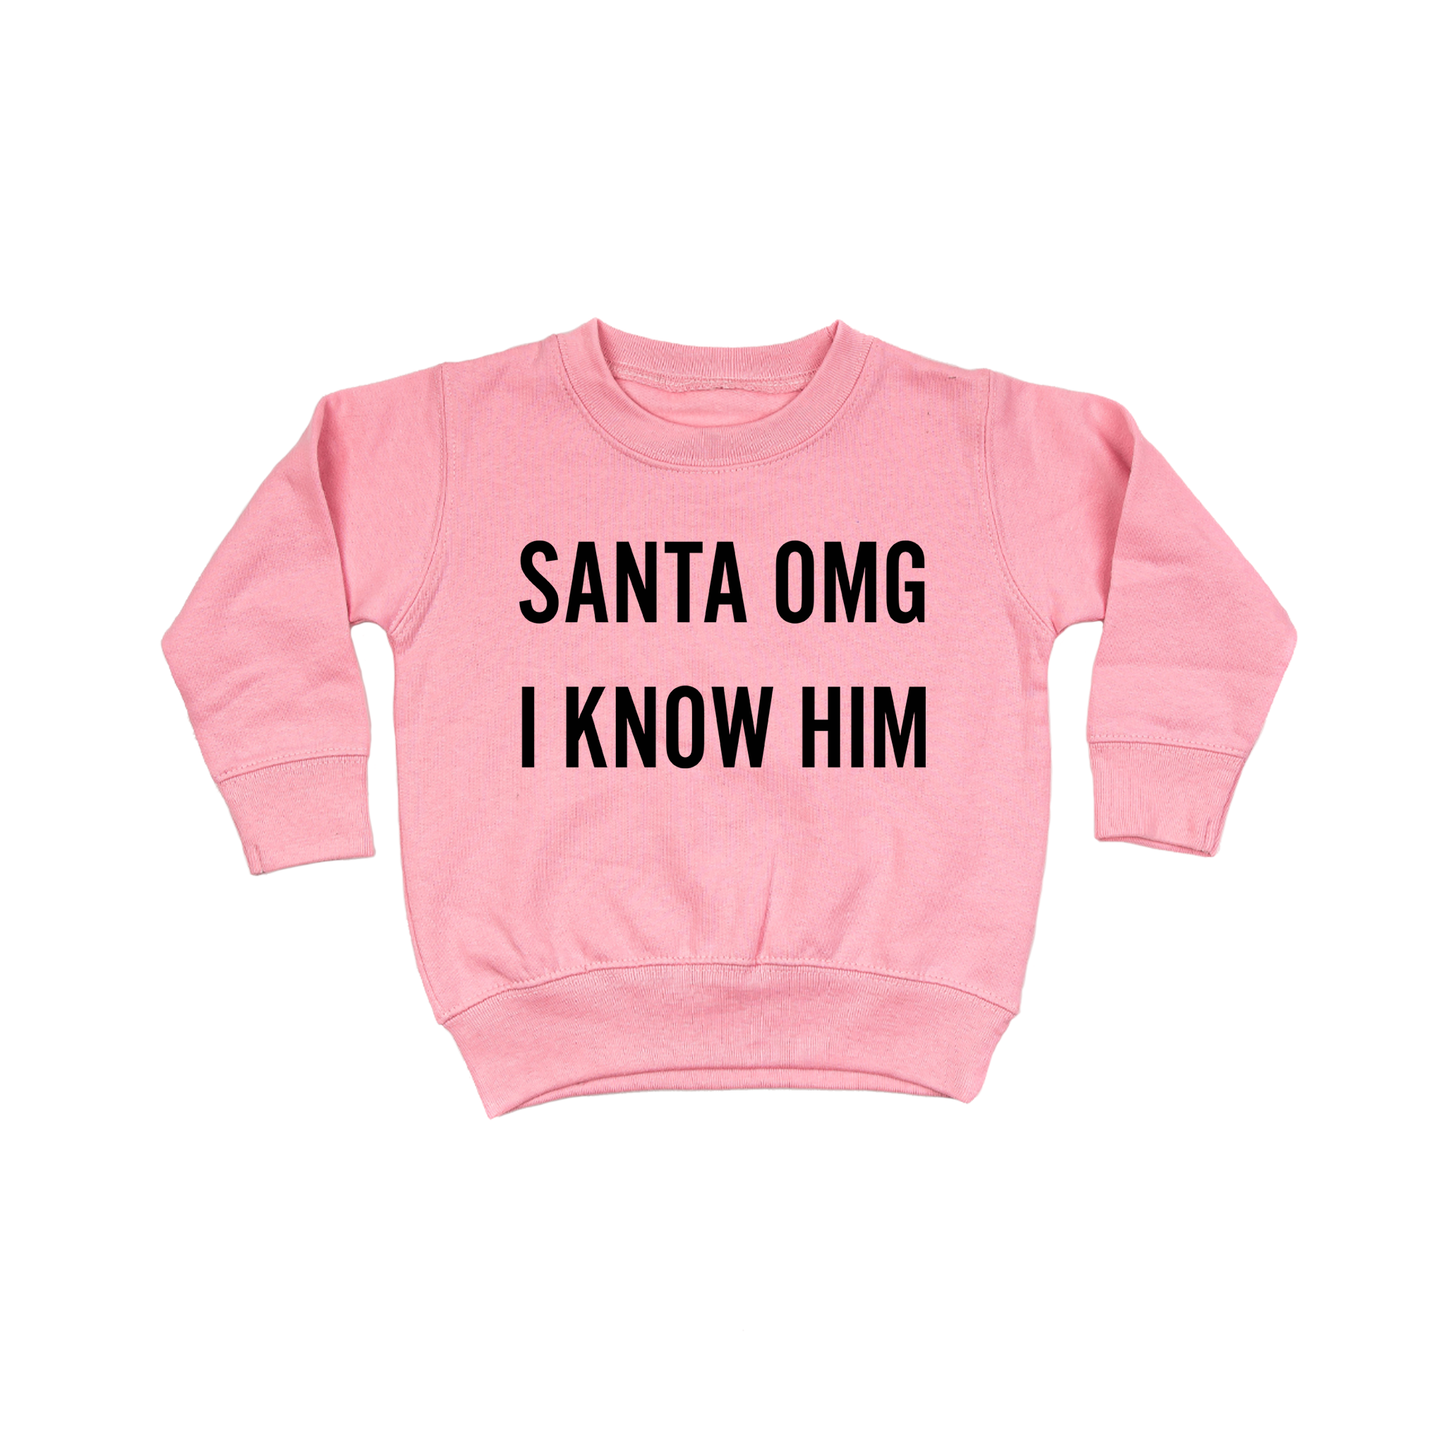 Santa OMG I Know Him (Black) - Kids Sweatshirt (Pink)